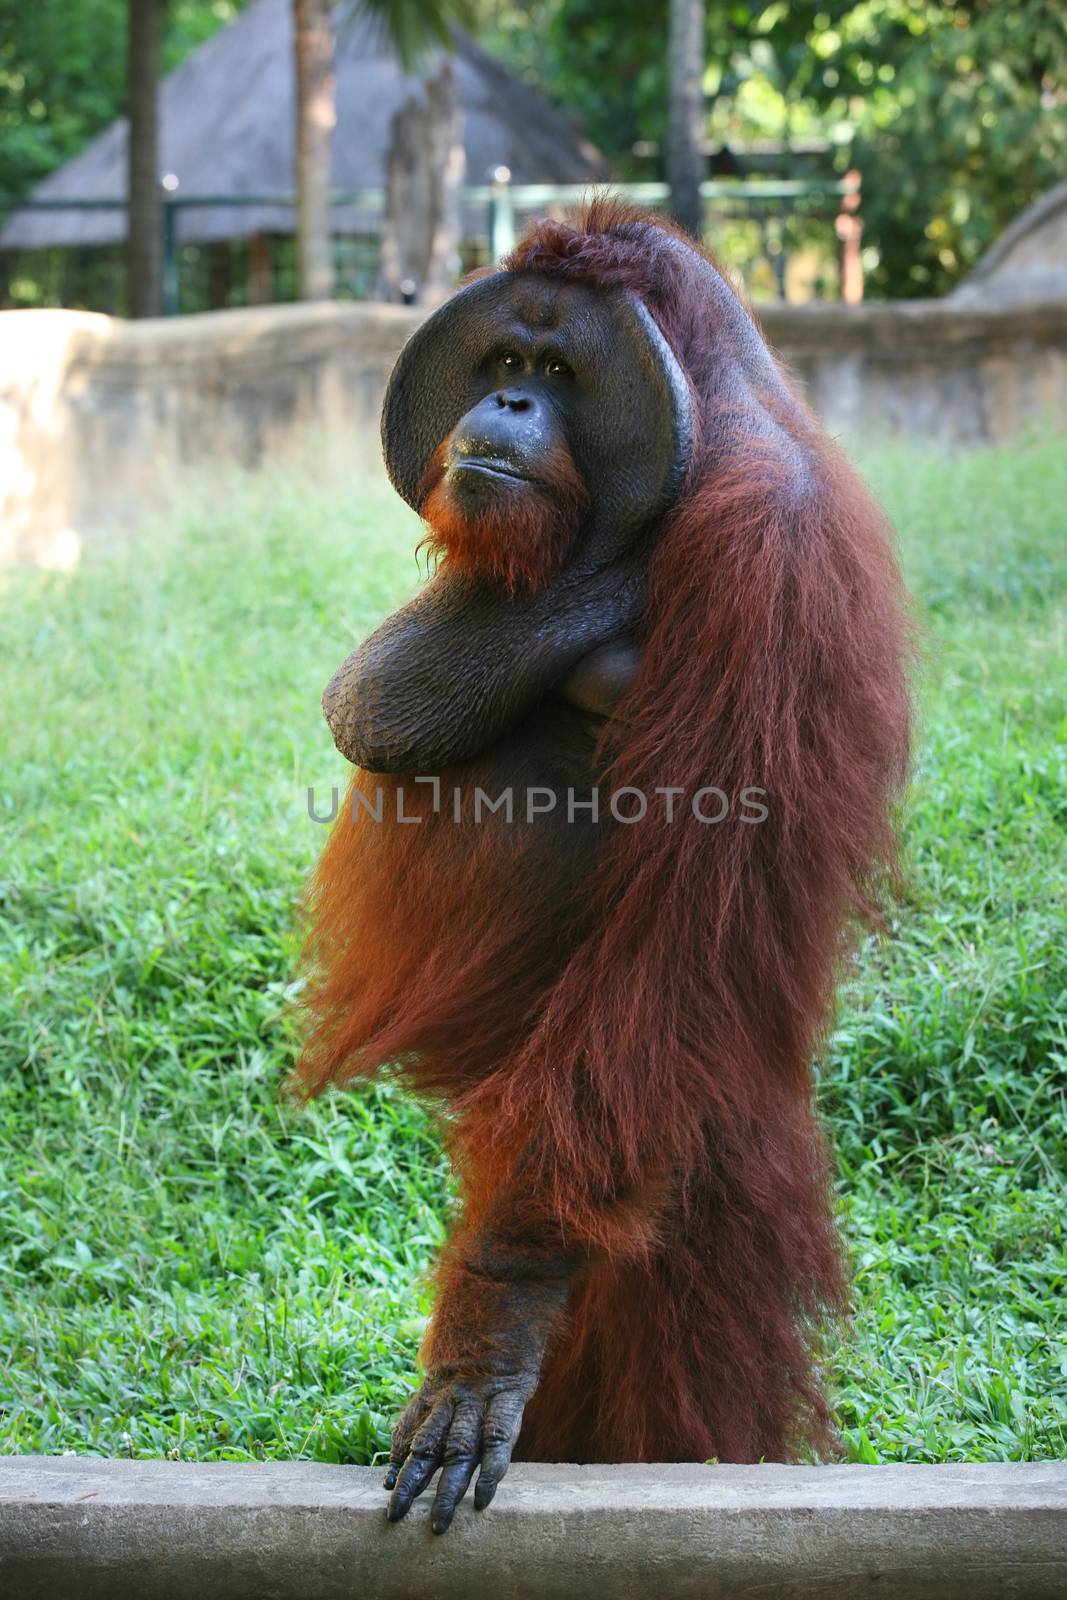 Adult orangutan in zoo. Indonesia